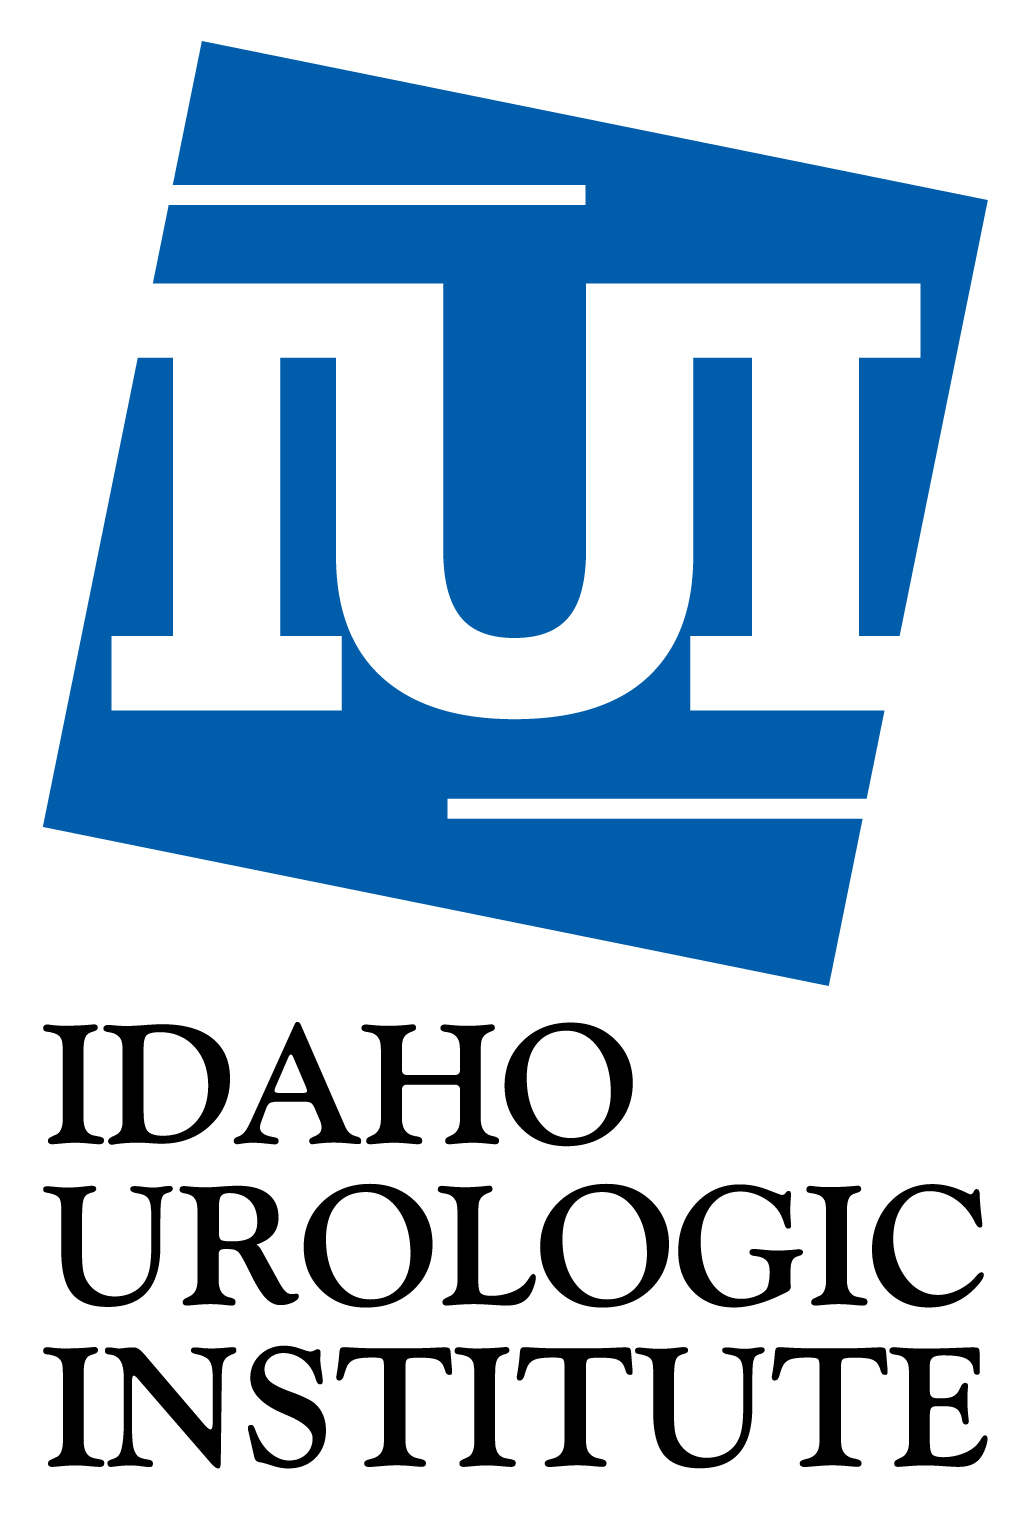 Idaho Urologic Institute